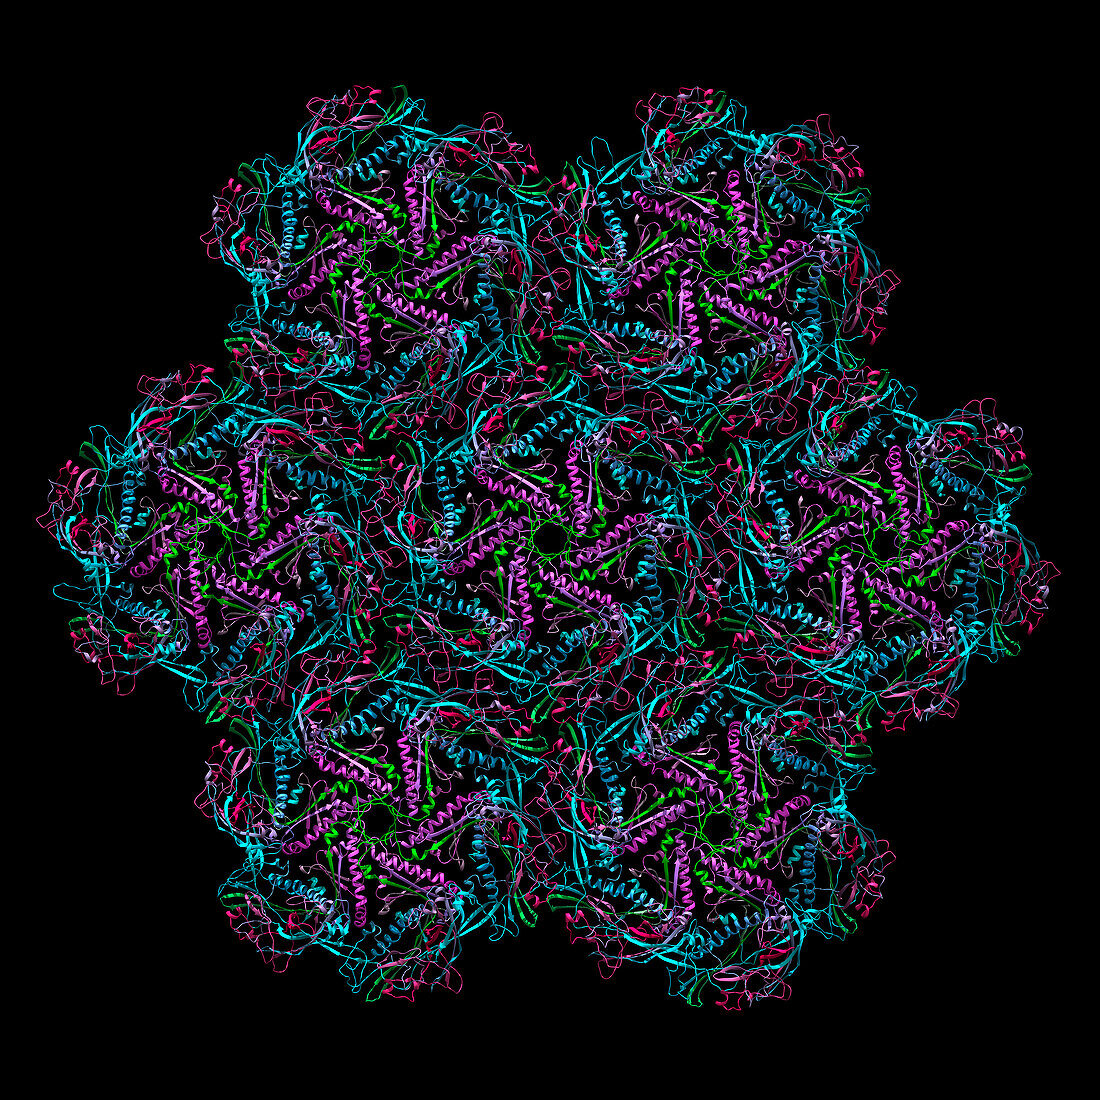 Jumbo phage empty capsid hexamers, illustration